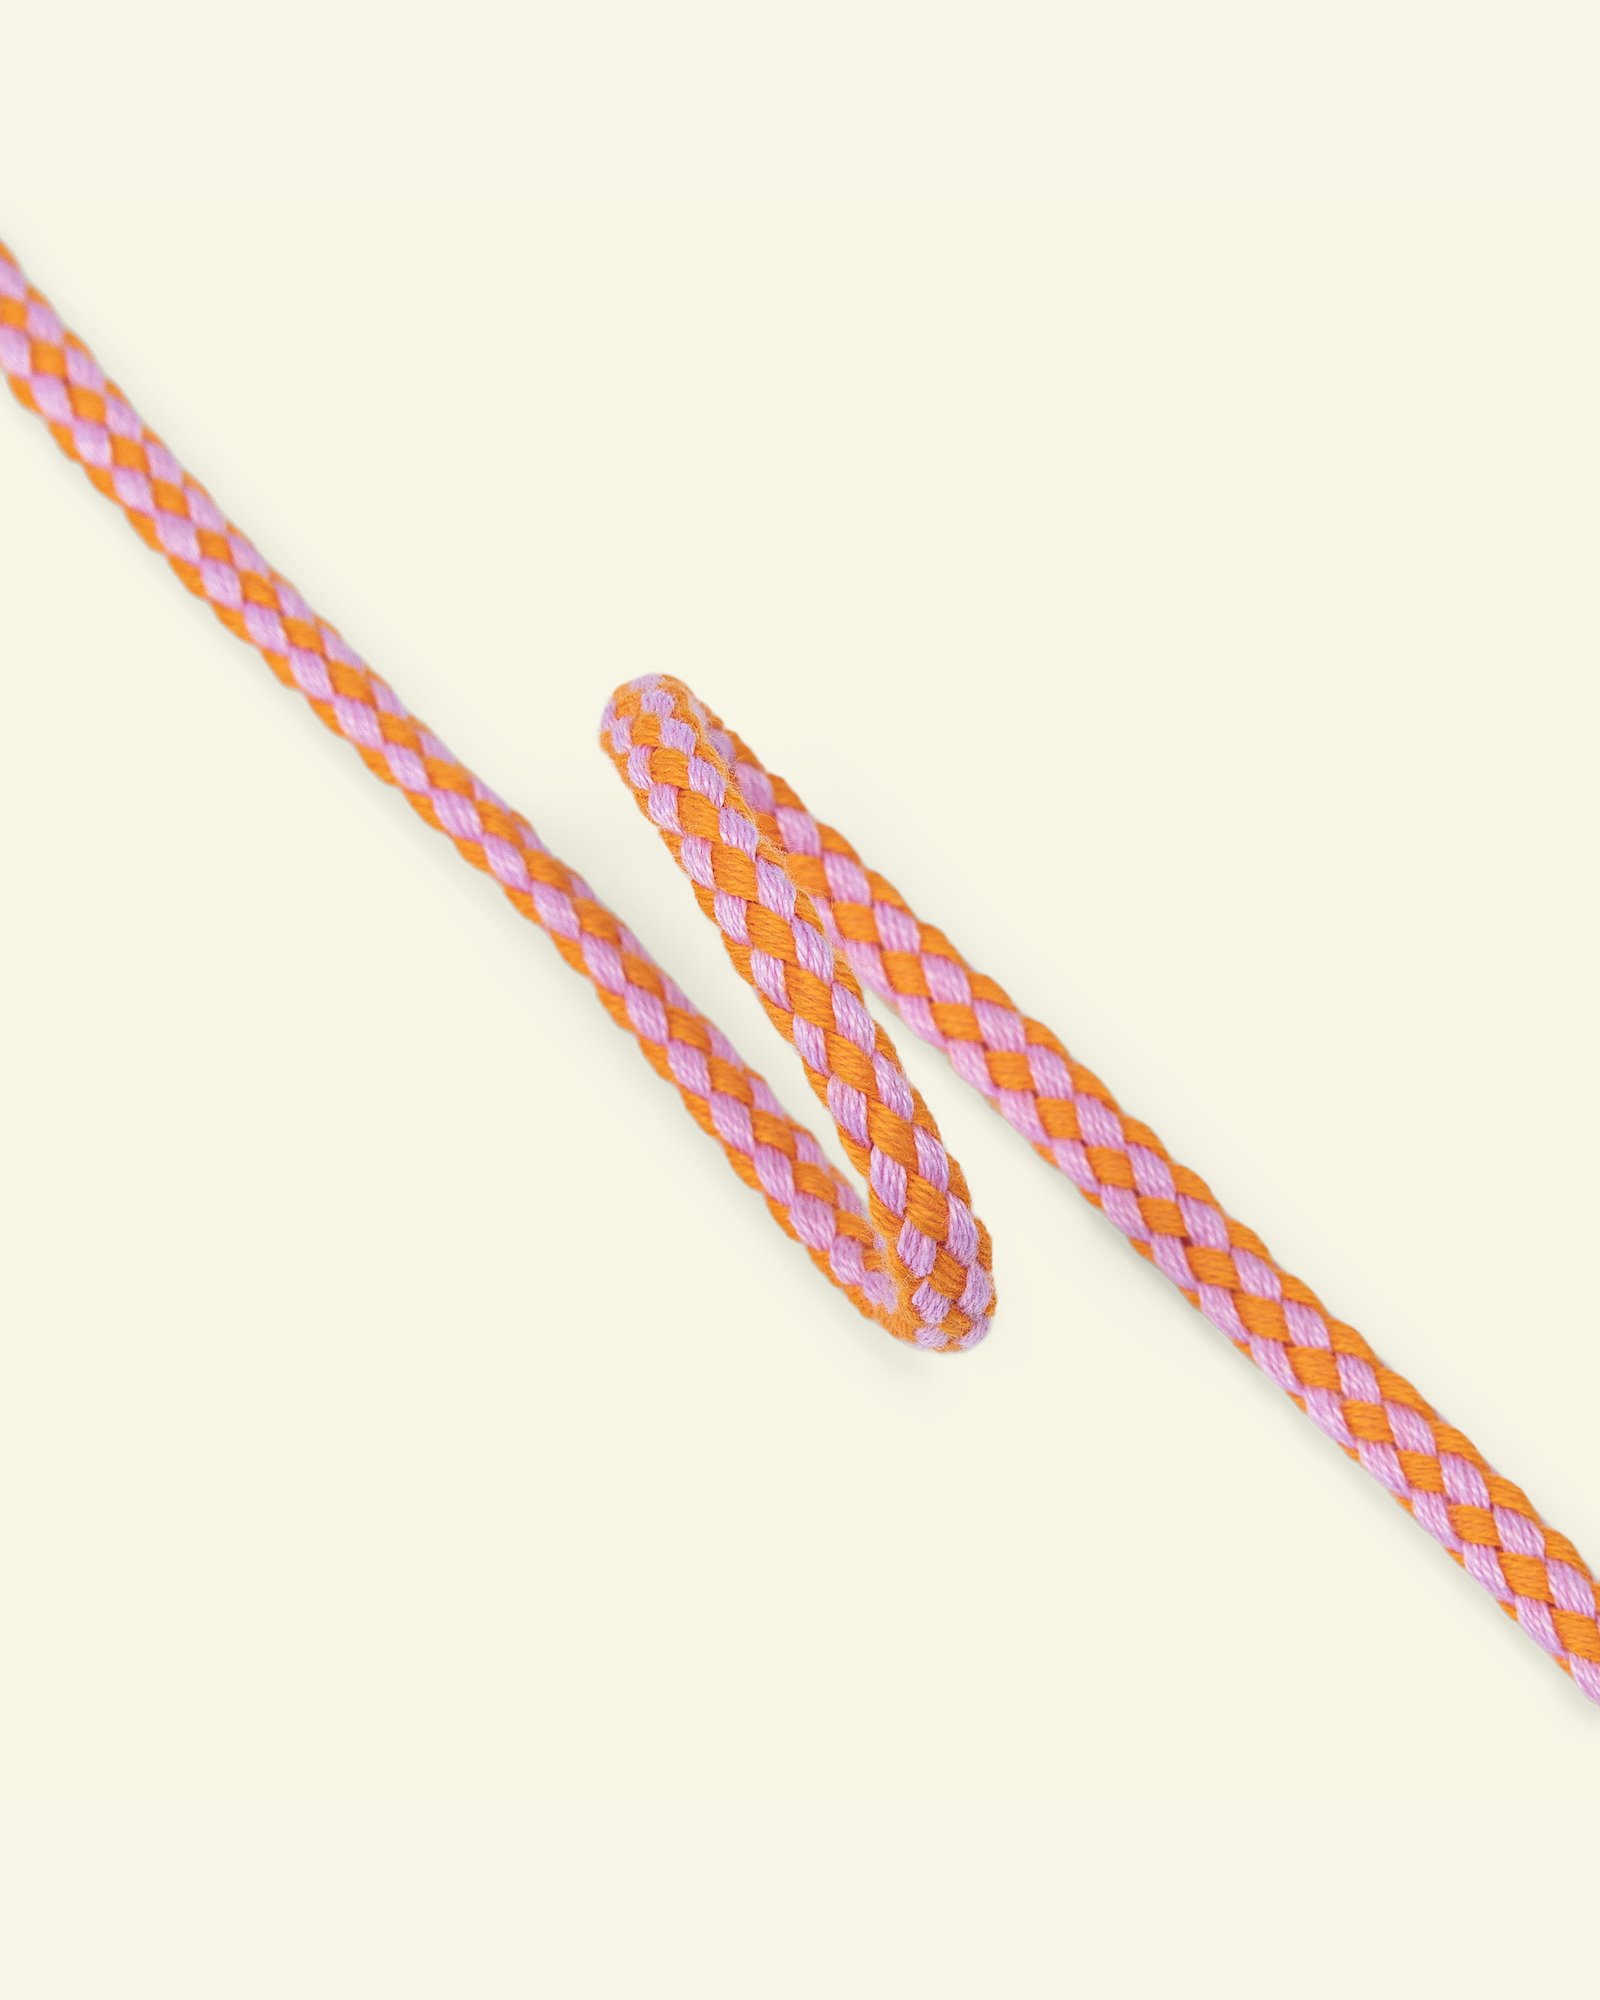 Anorak cord 4,5mm pink/orange 5m 75204_pack